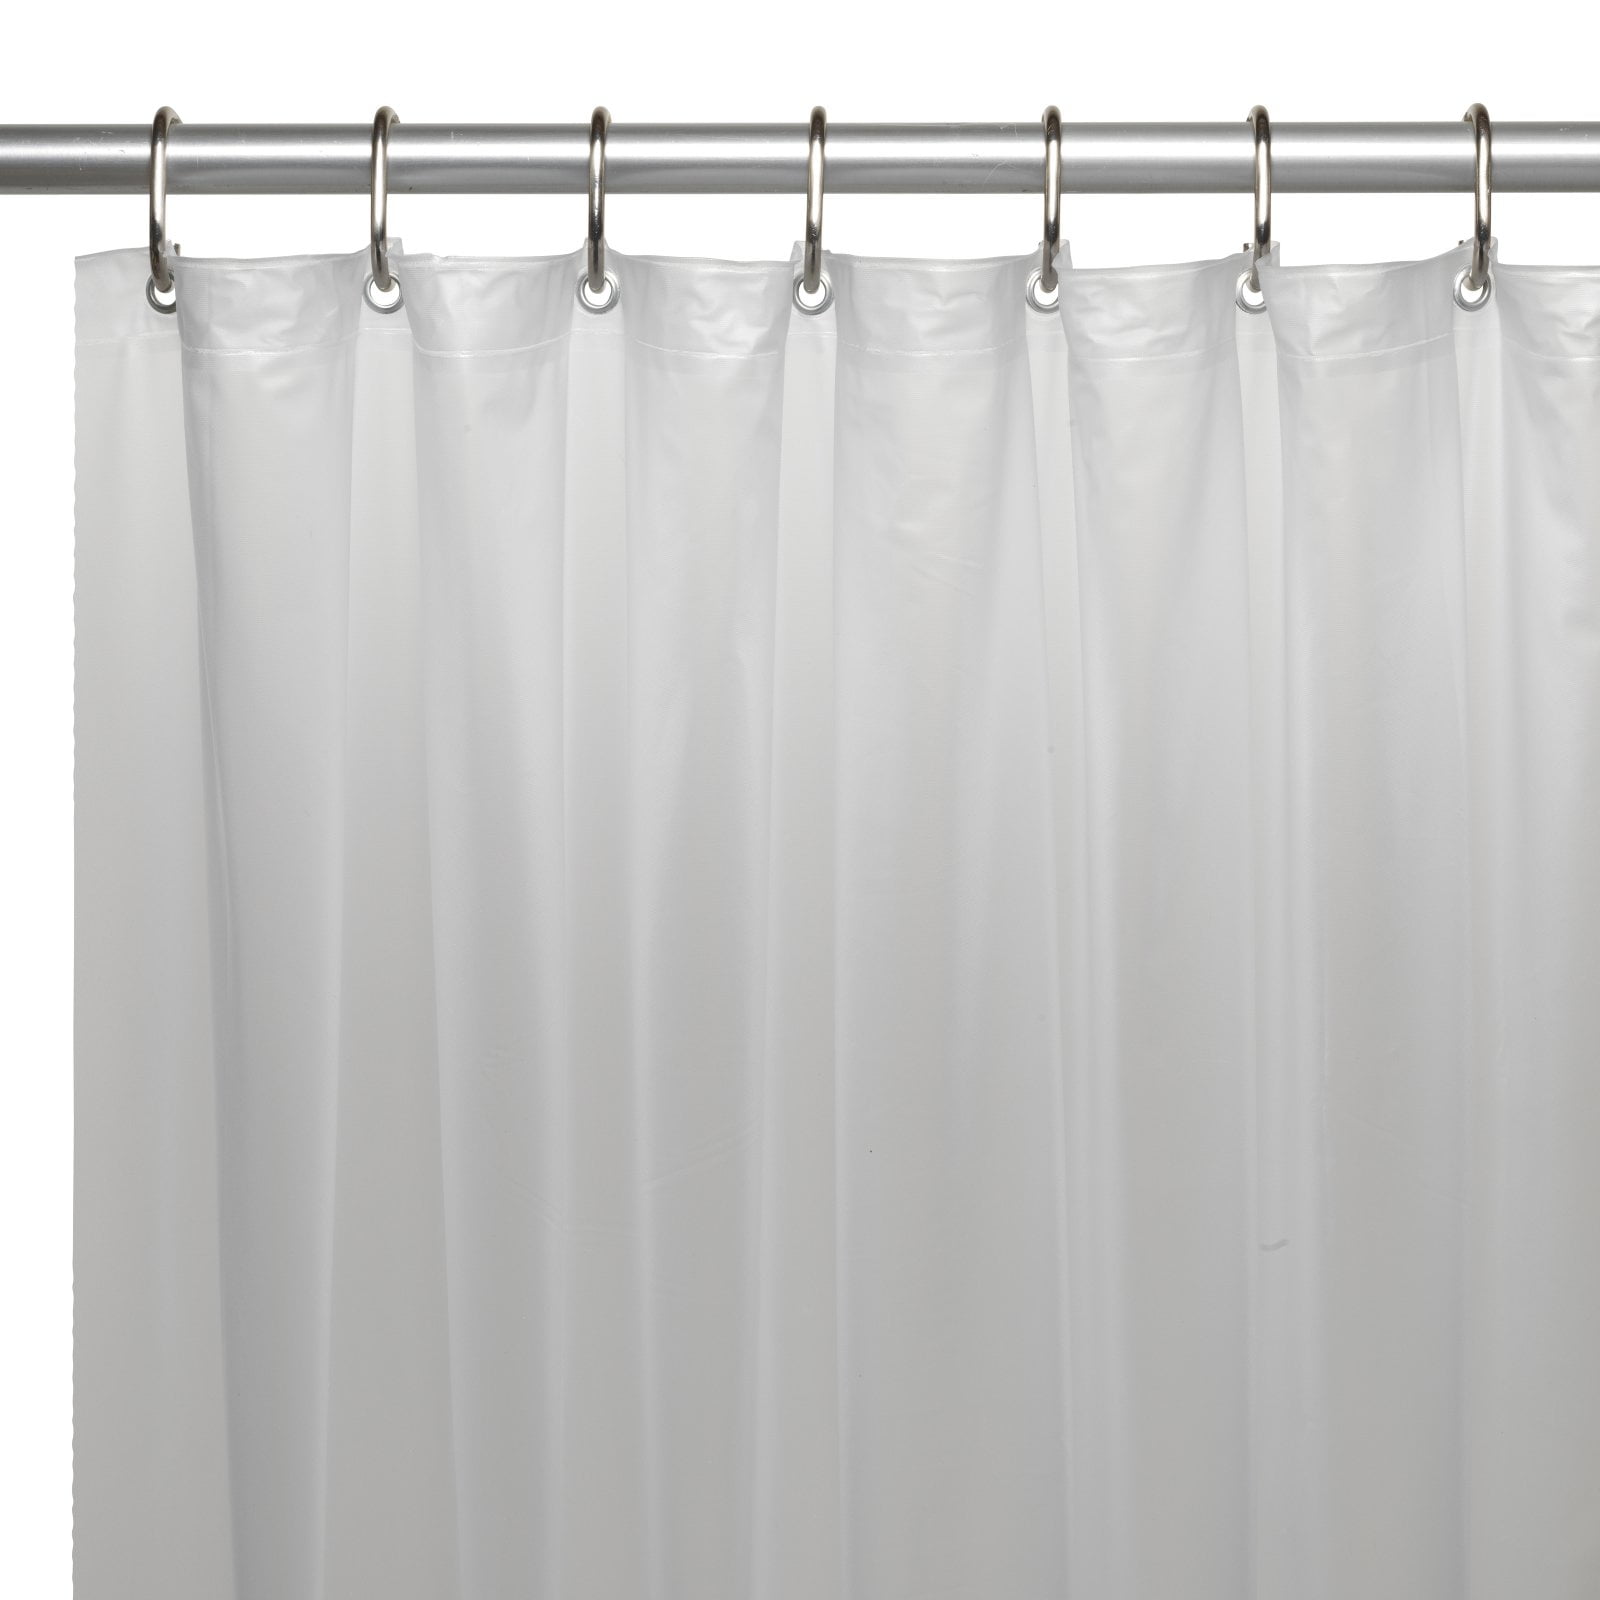 10 Gauge Vinyl Shower Curtain Liner, Extra Long Shower Curtain Liner 84 Clear